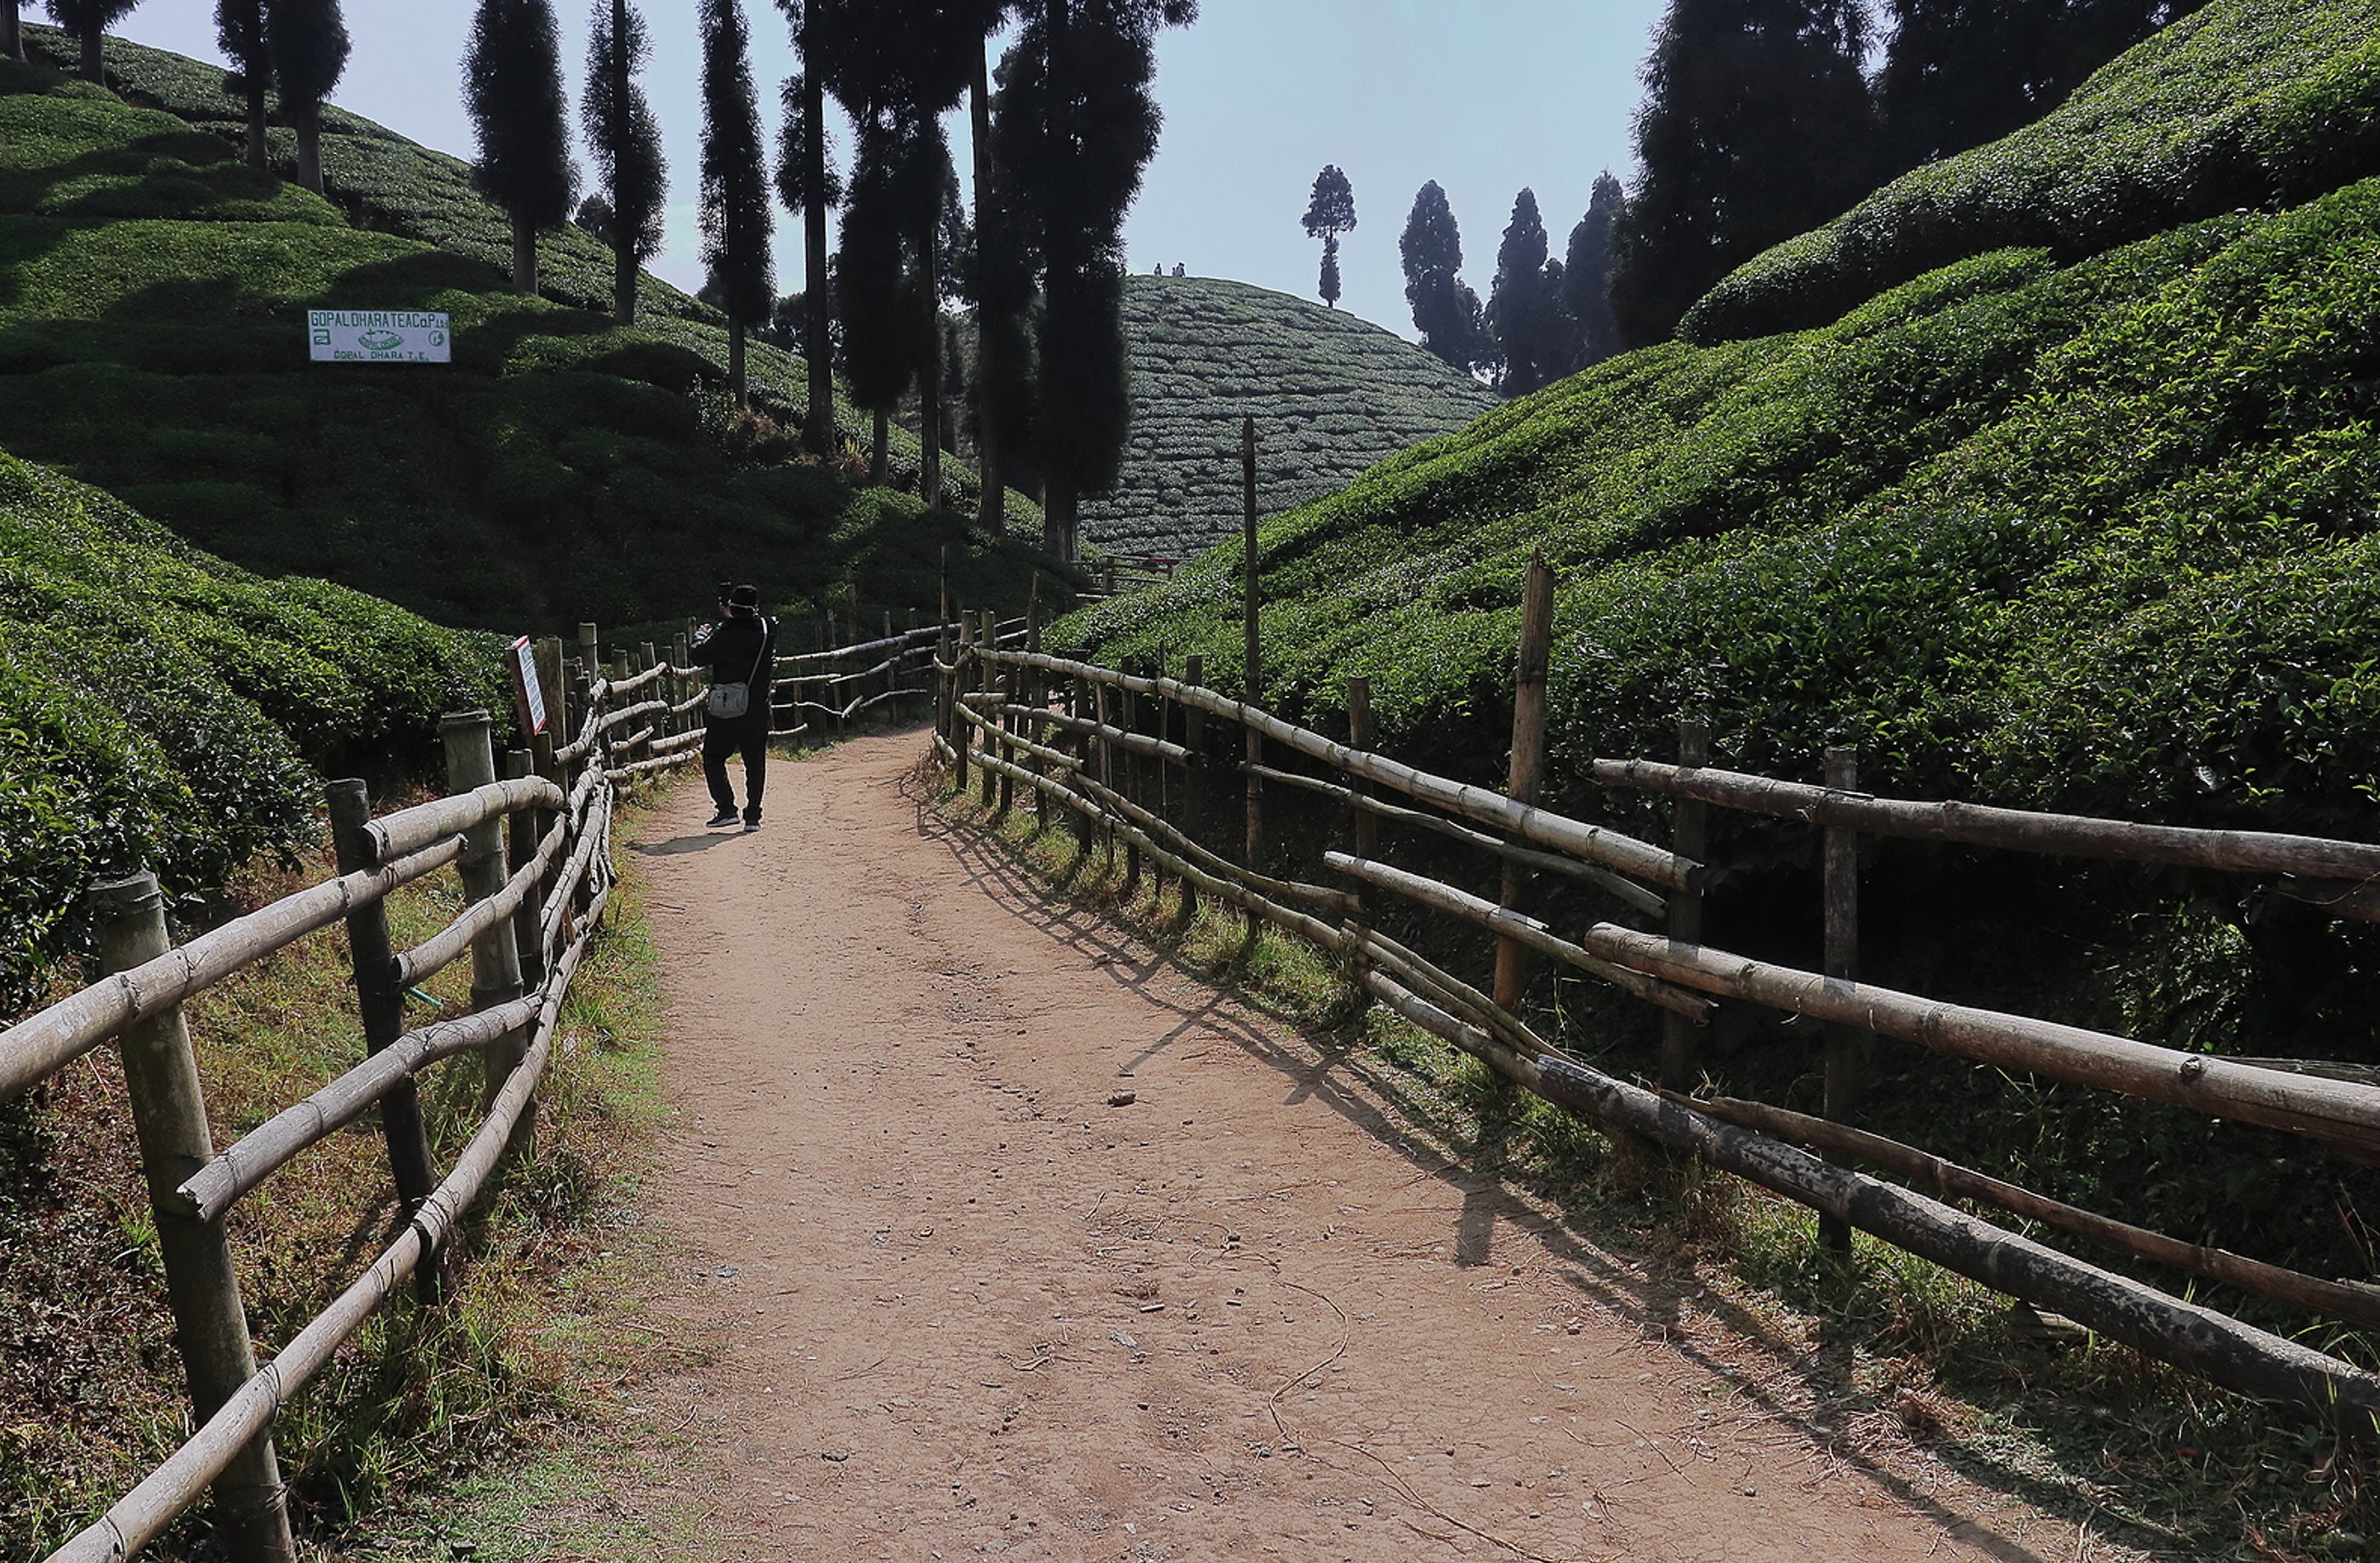 Darjeeling Teas Future - Issues and Developments